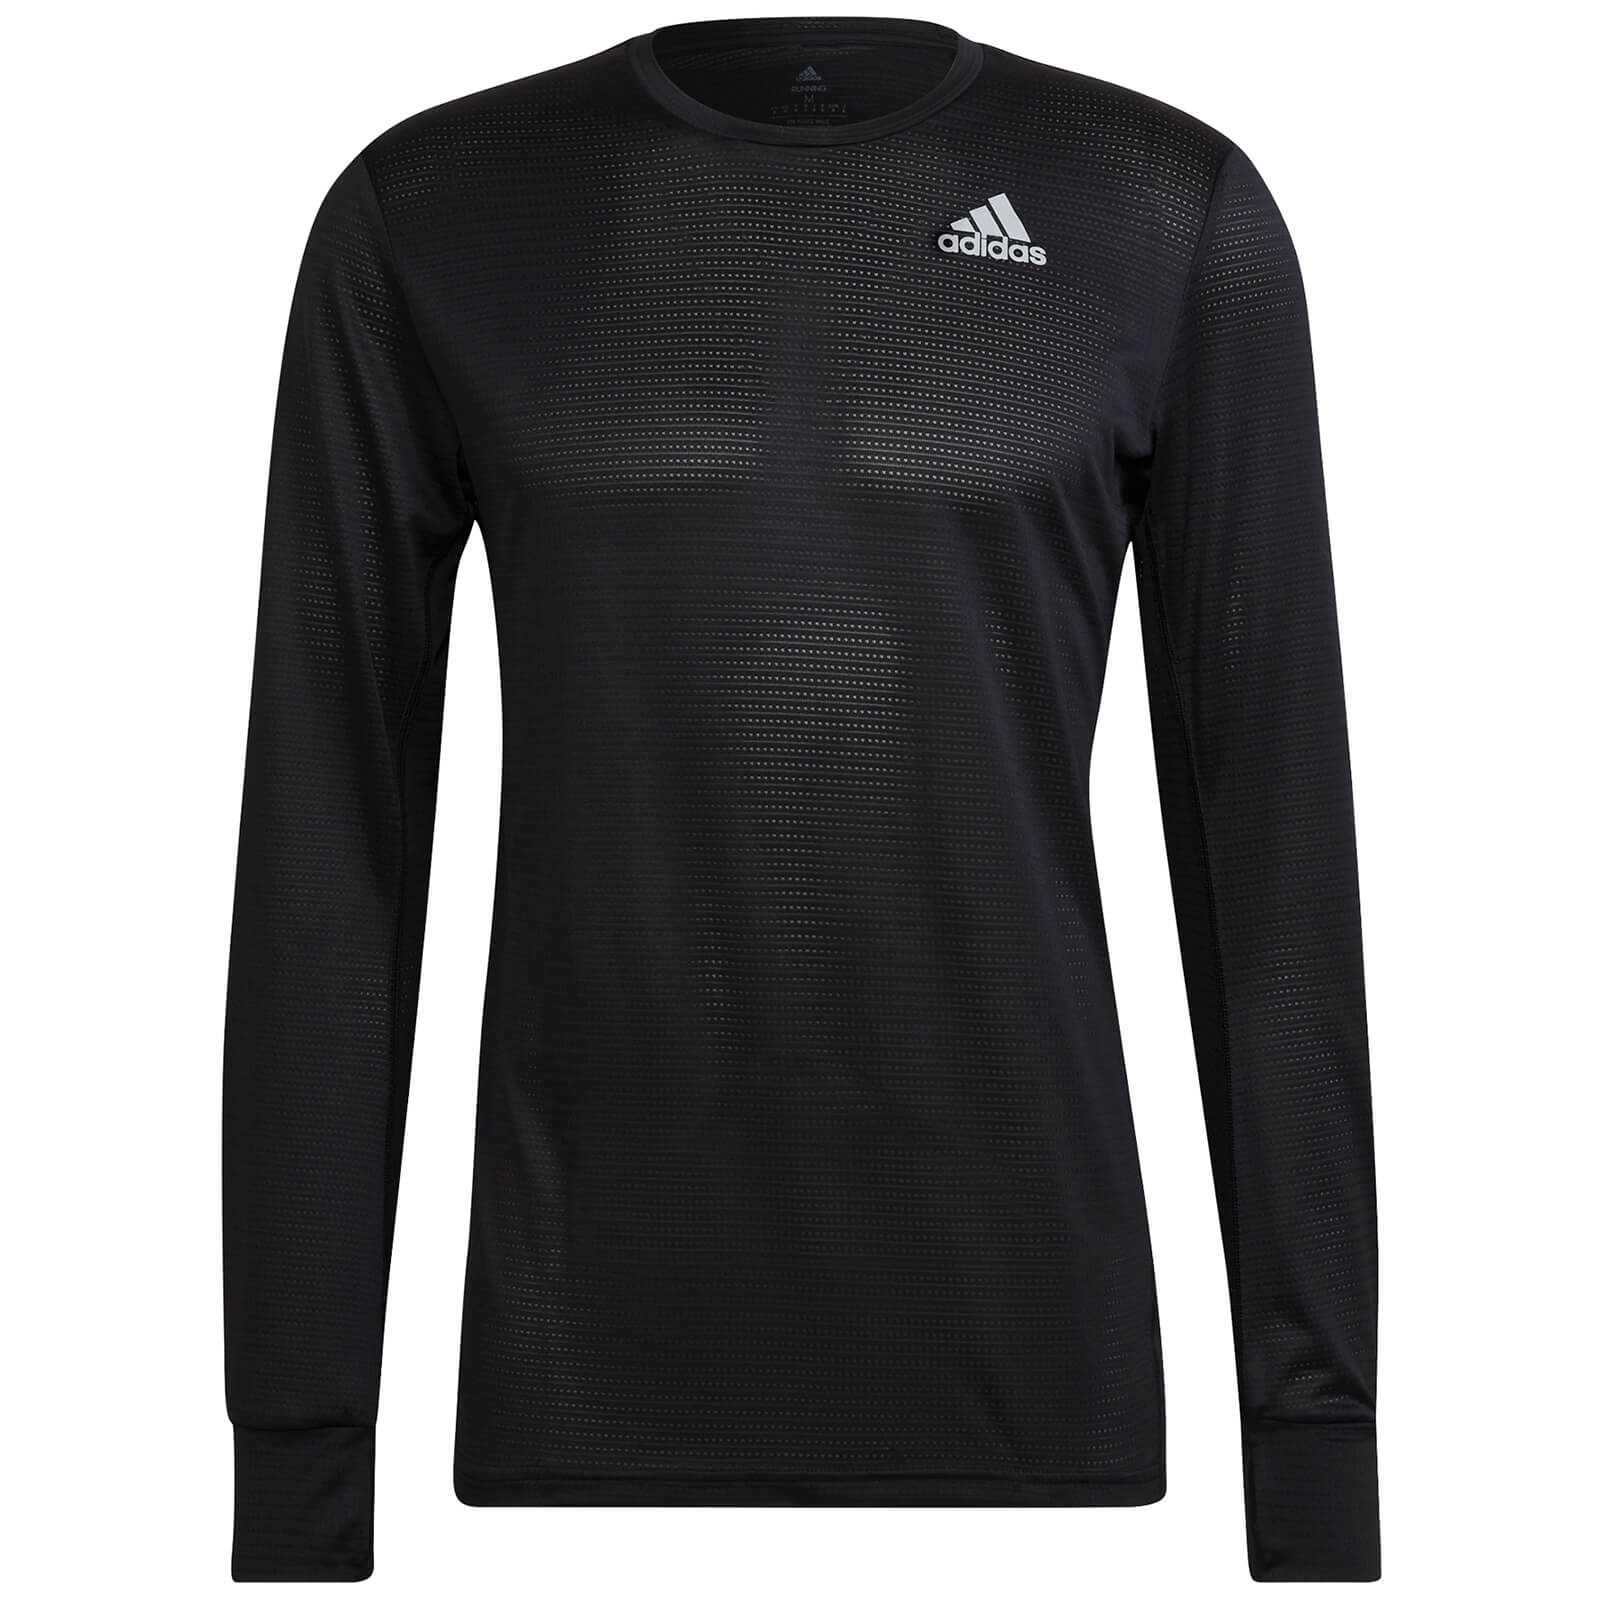 Adidas Own The Run Long Sleeve T-Shirt - Black/Reflective Silver - L